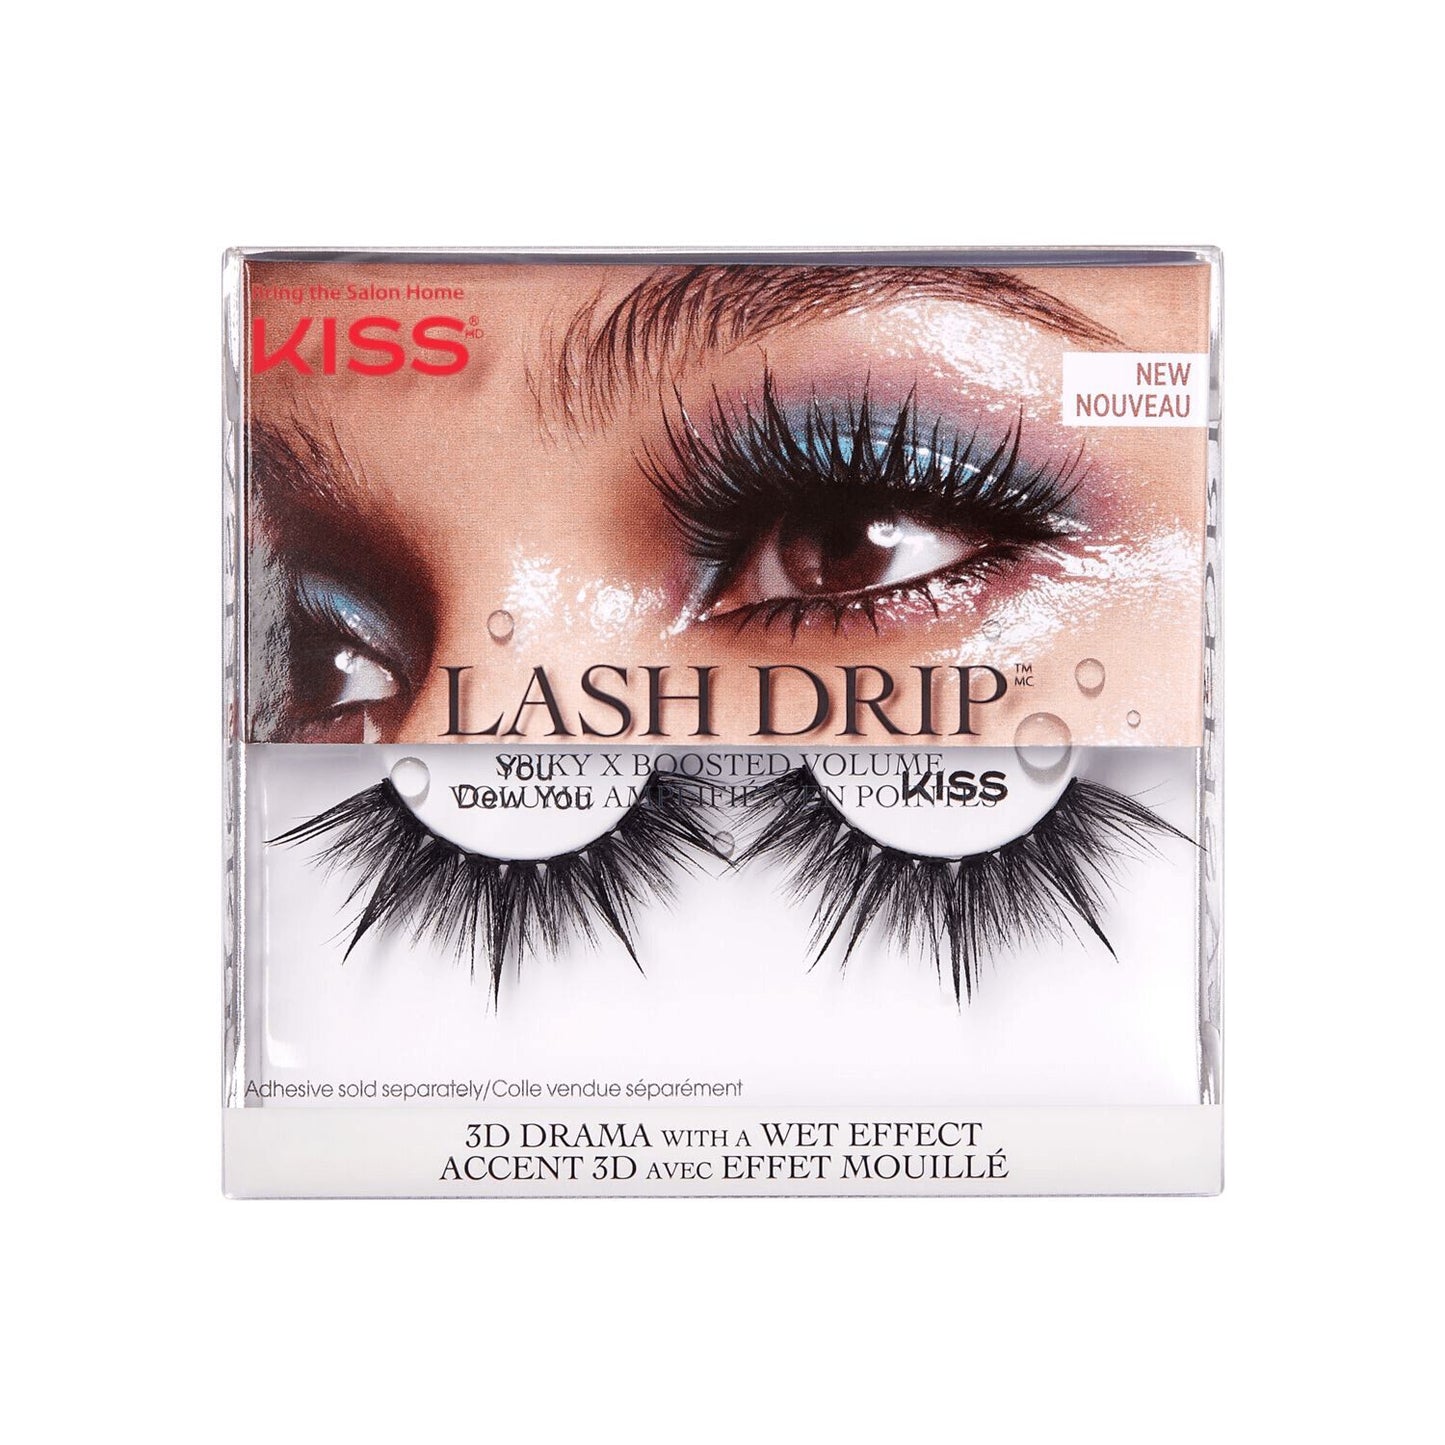 Lash Drip  by   KISS Lash Drip Spiky X Boosted False Eyelashes - You Dew You